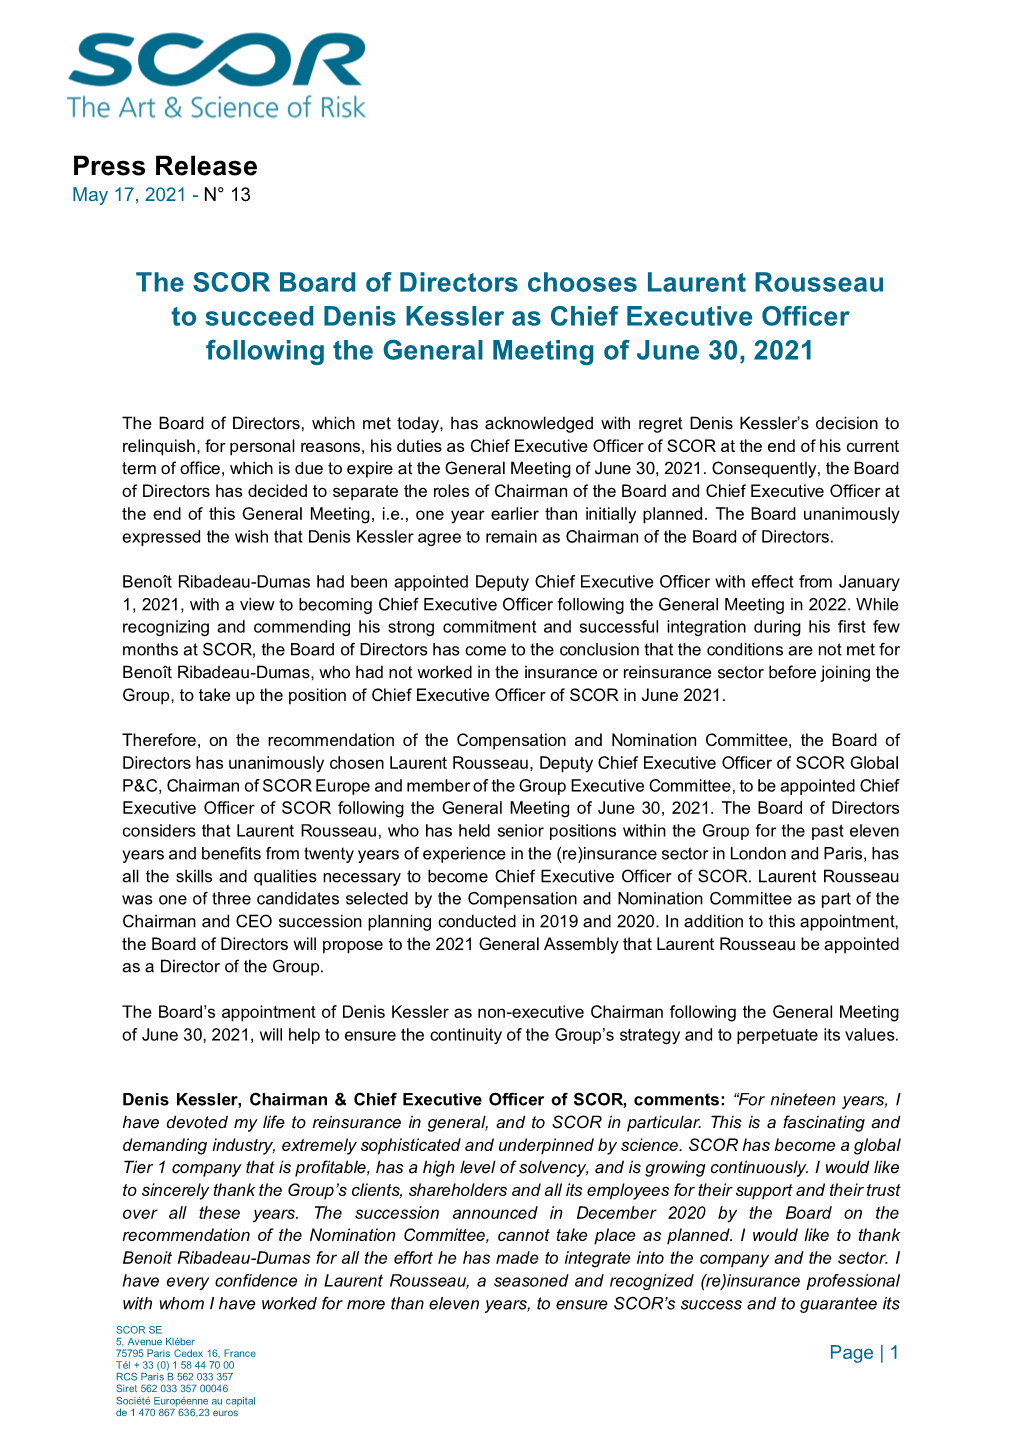 Press Release the SCOR Board of Directors Chooses Laurent